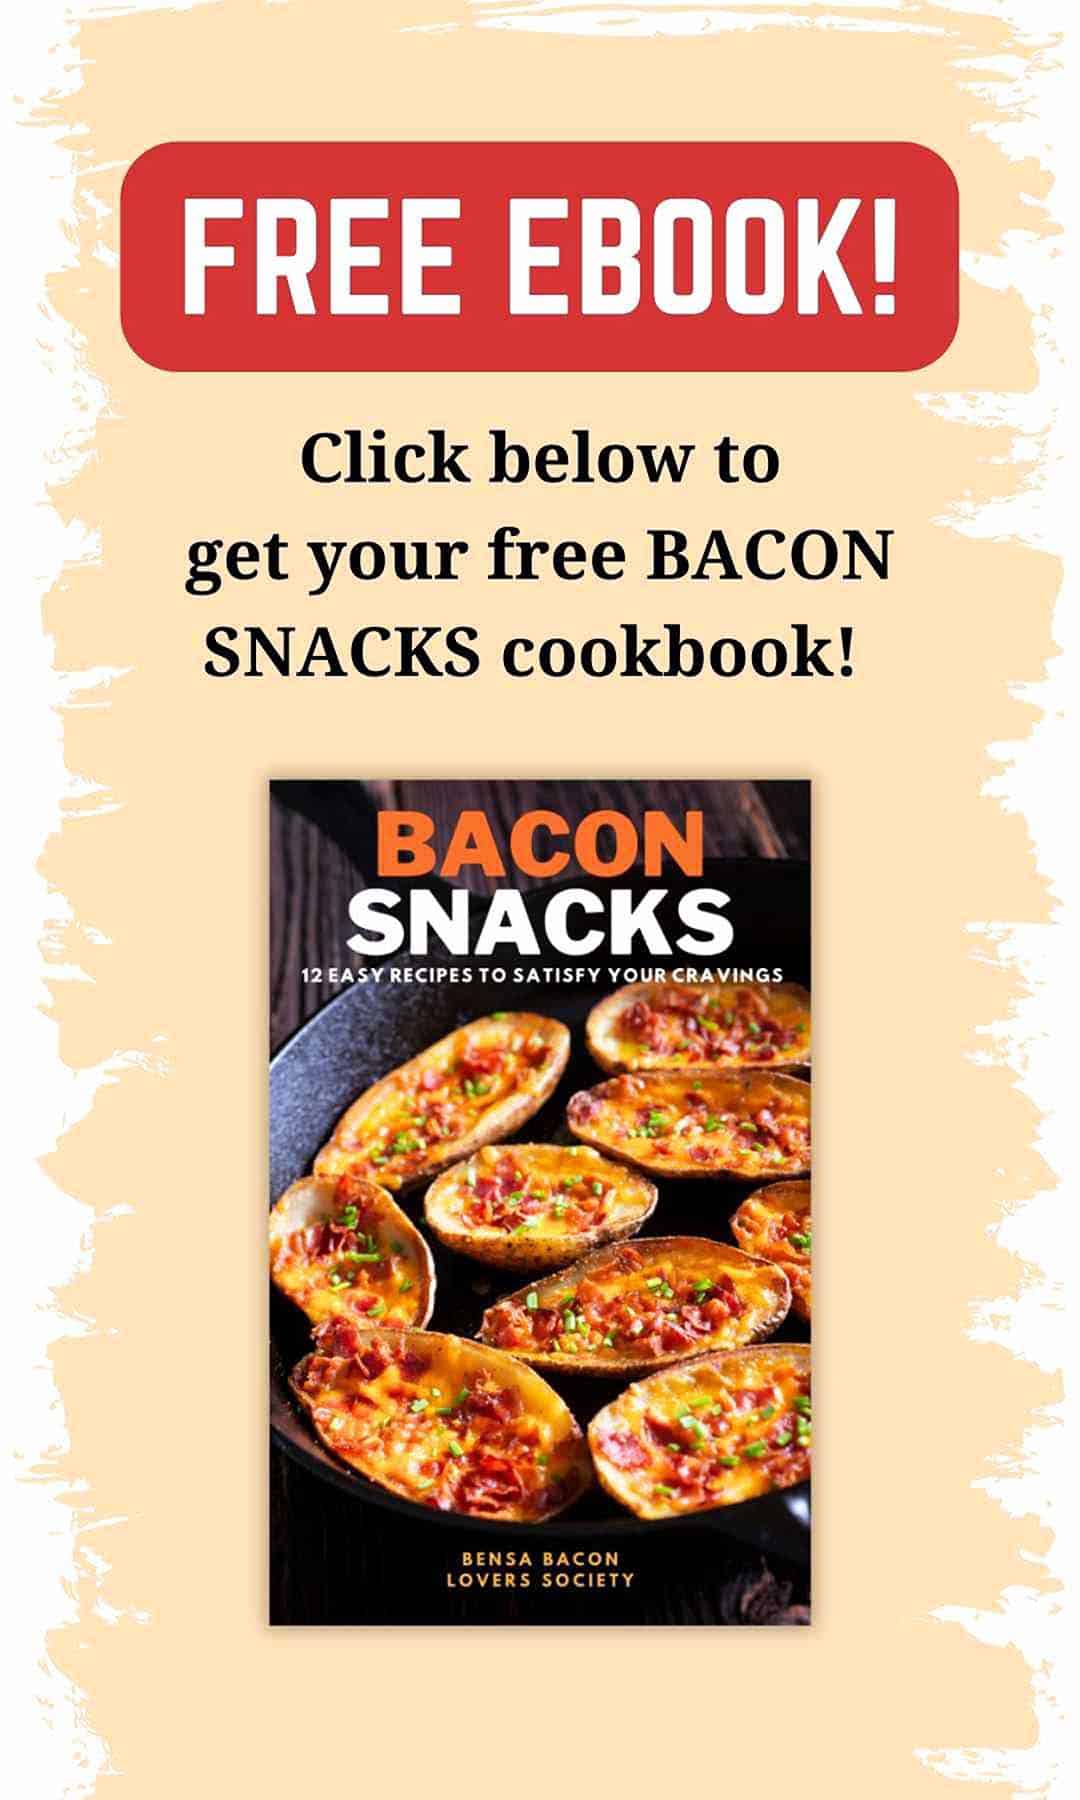 https://bensabaconlovers.com/wp-content/uploads/2023/06/free-bacon-snacks-cookbook.jpg